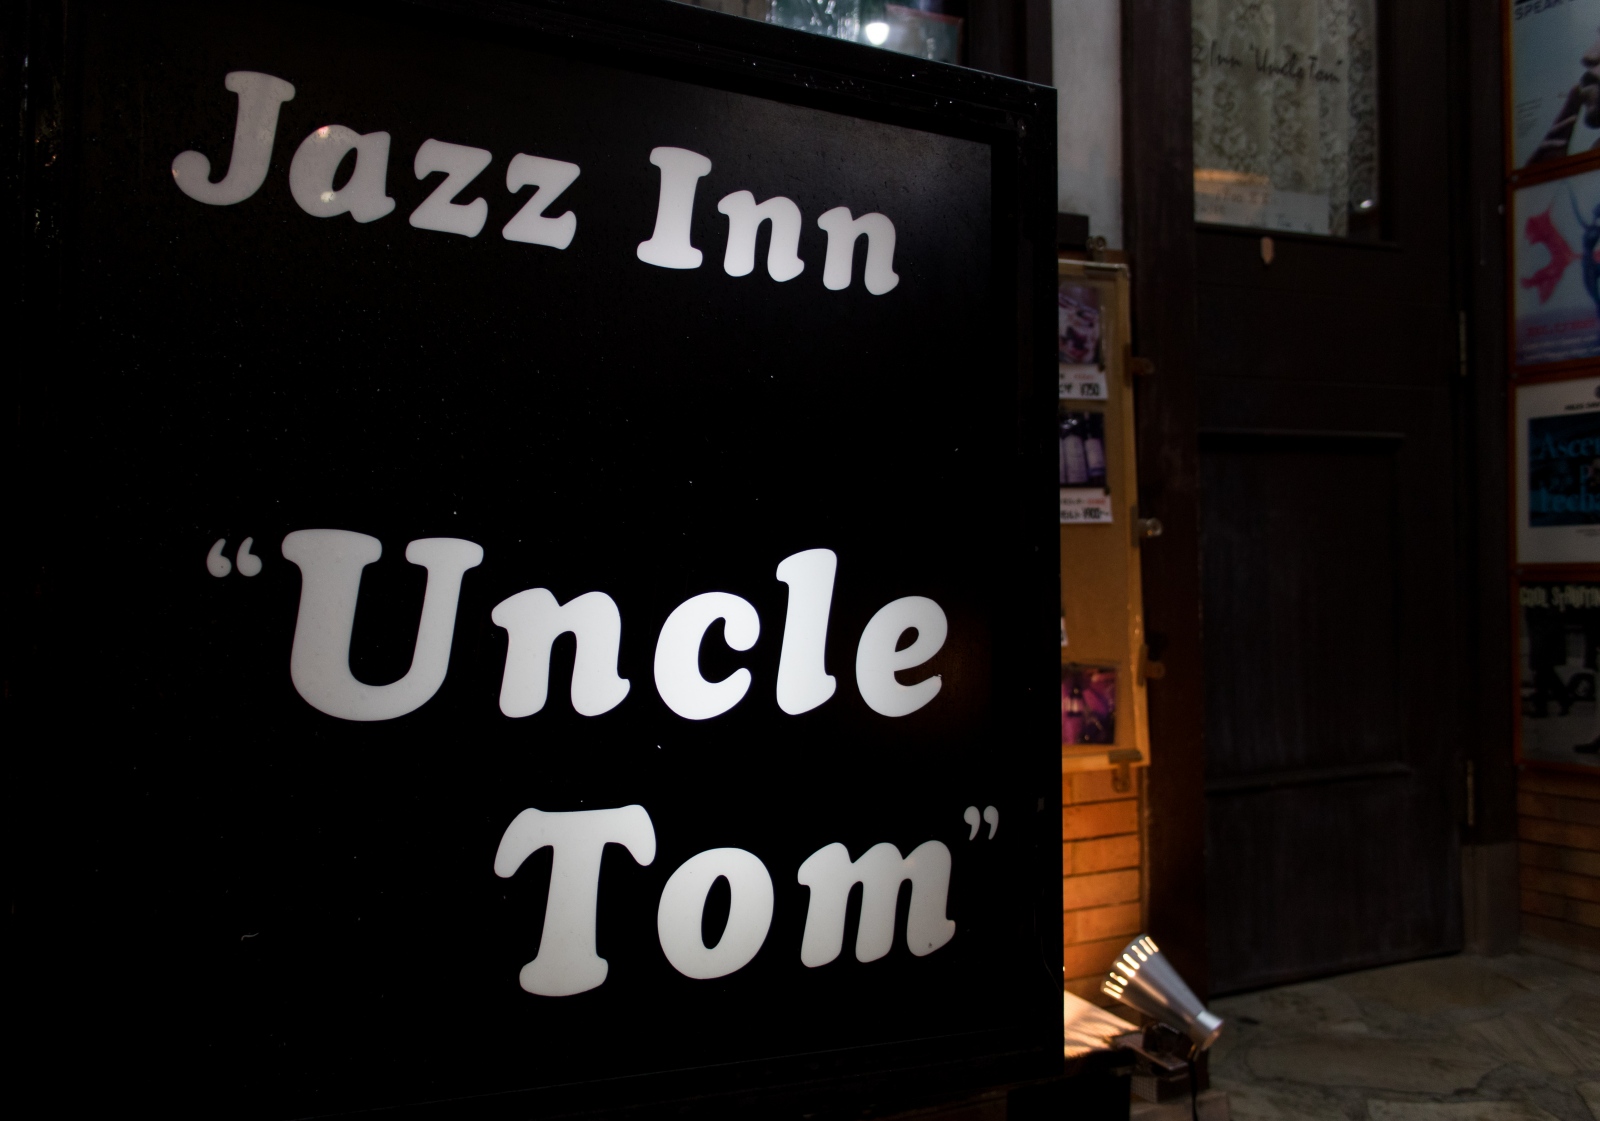 Uncle Tom